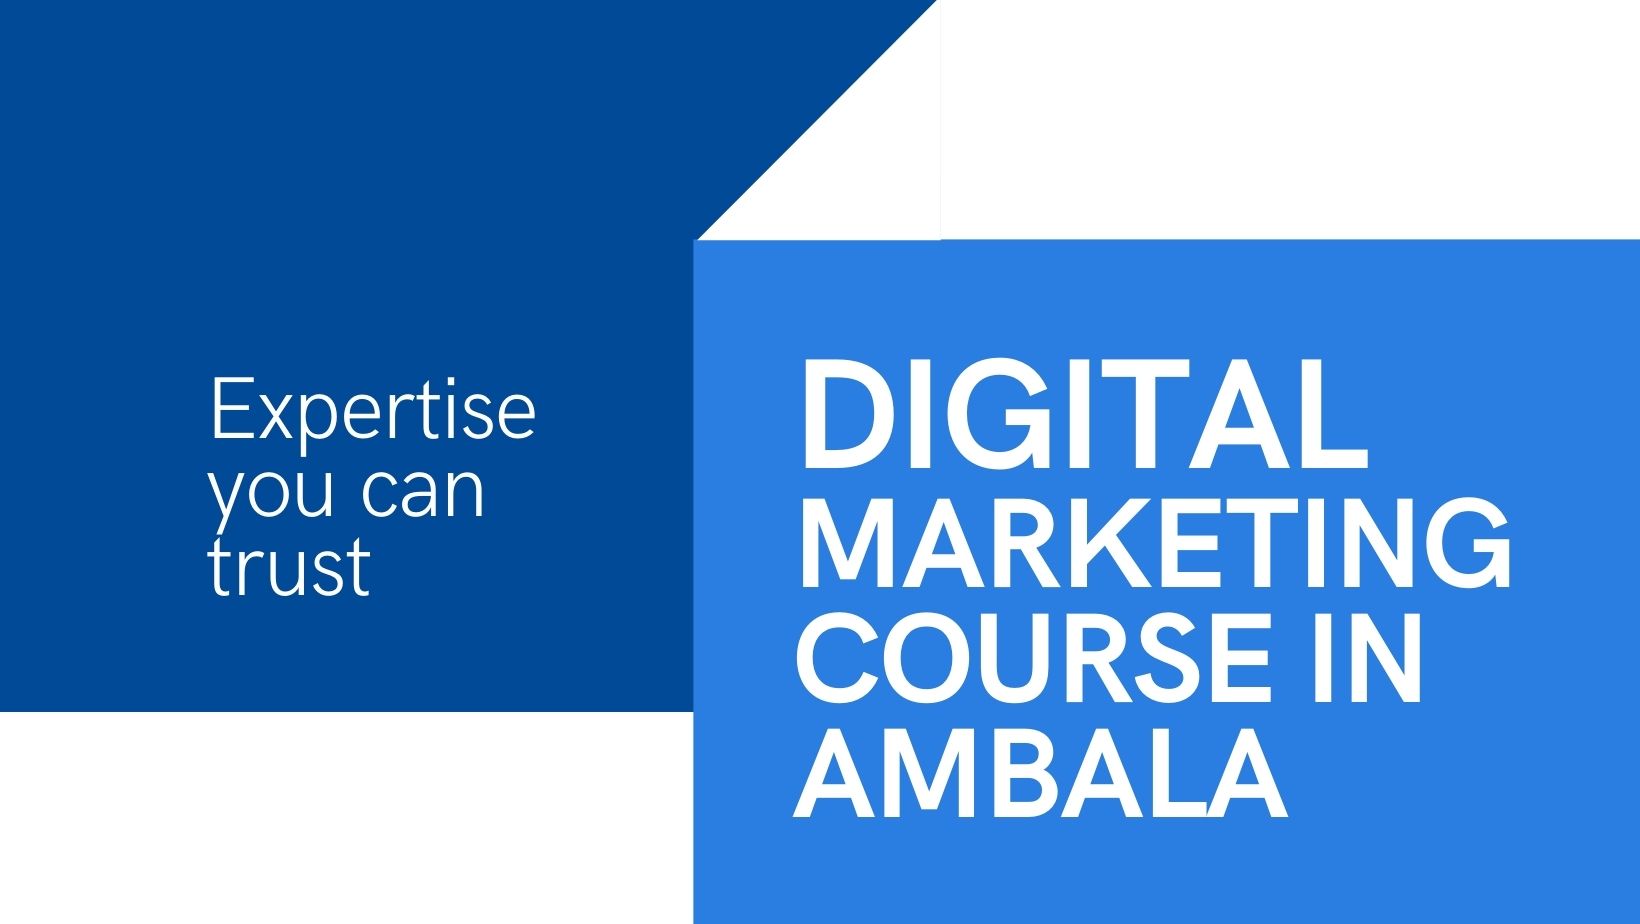 Digital marketing course in ambala